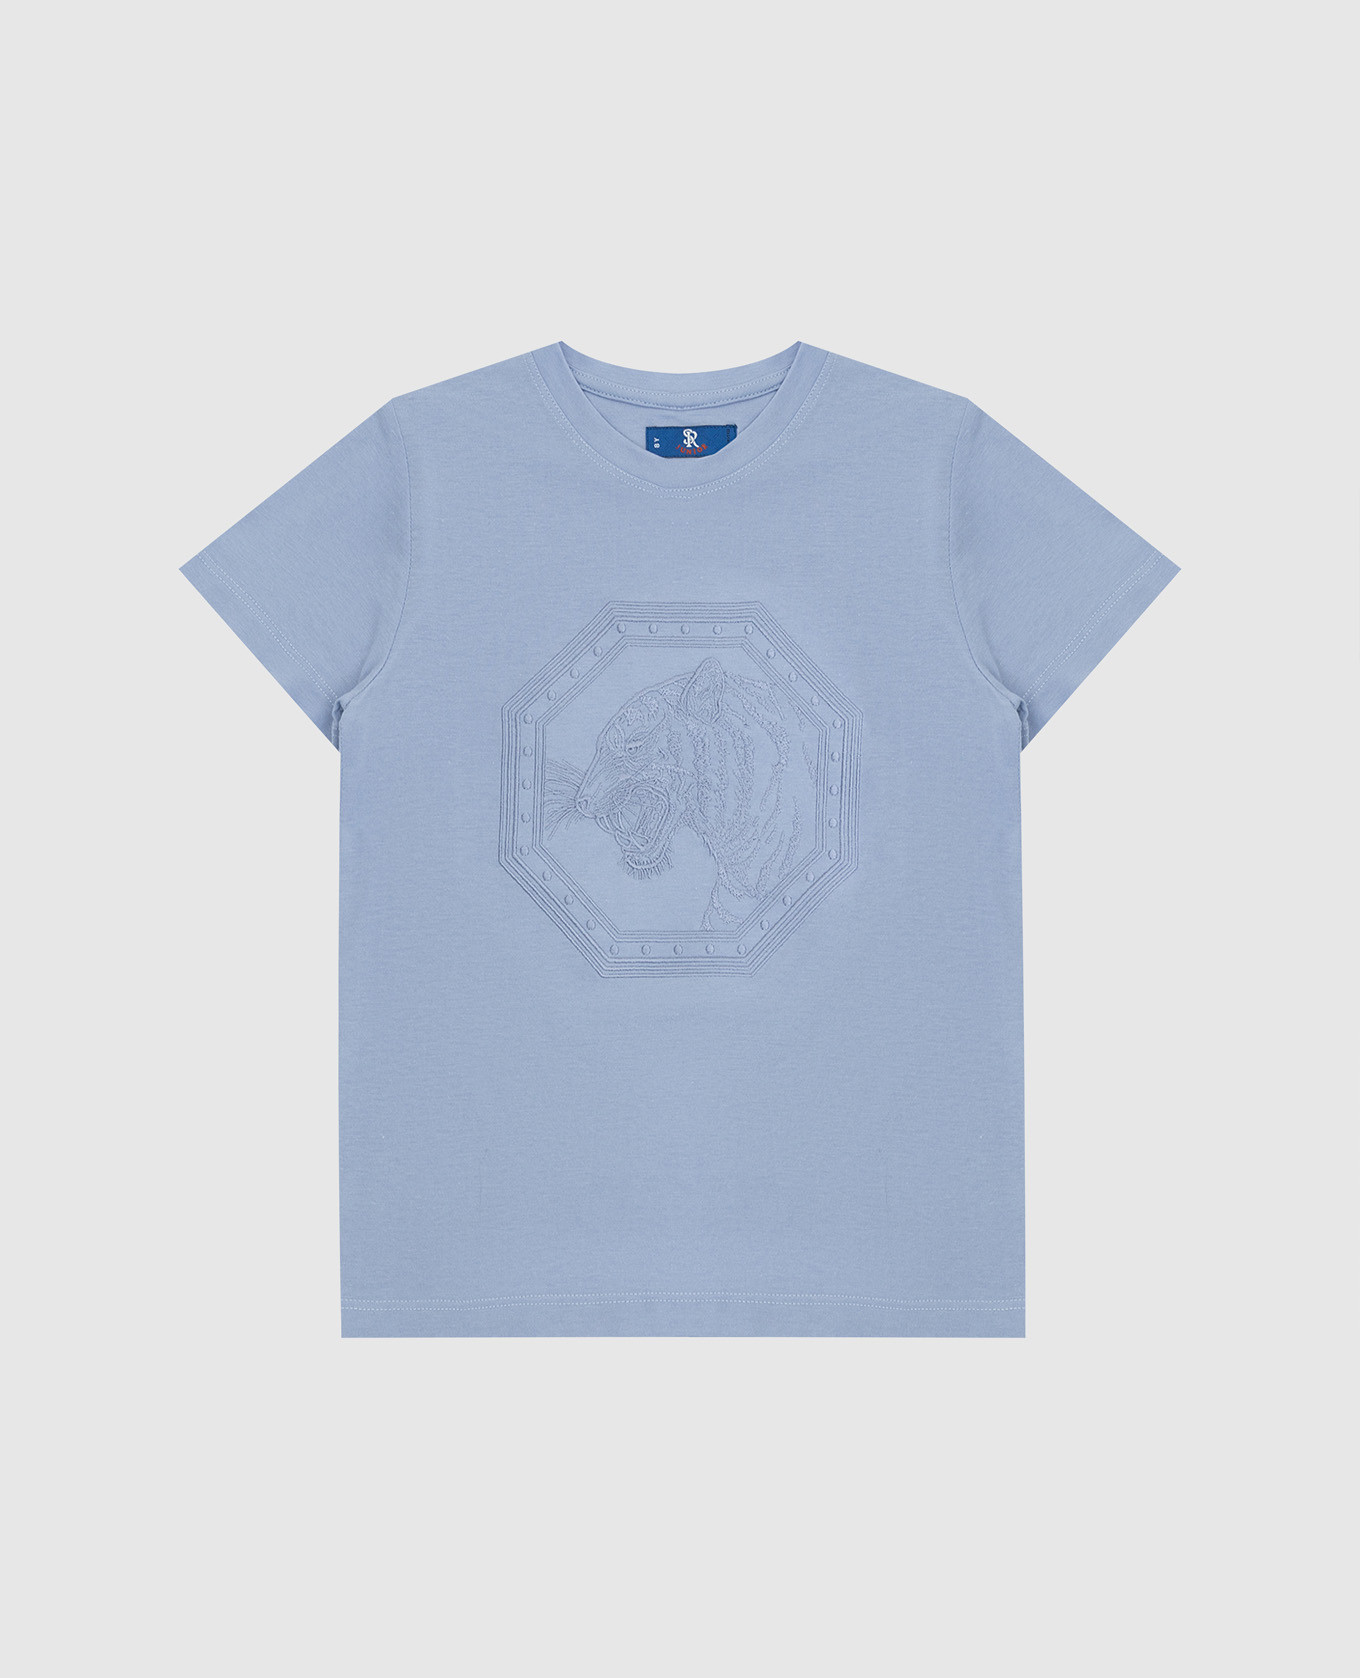 Stefano Ricci Детская сиреневая футболка с вышивкой YNH8200170803